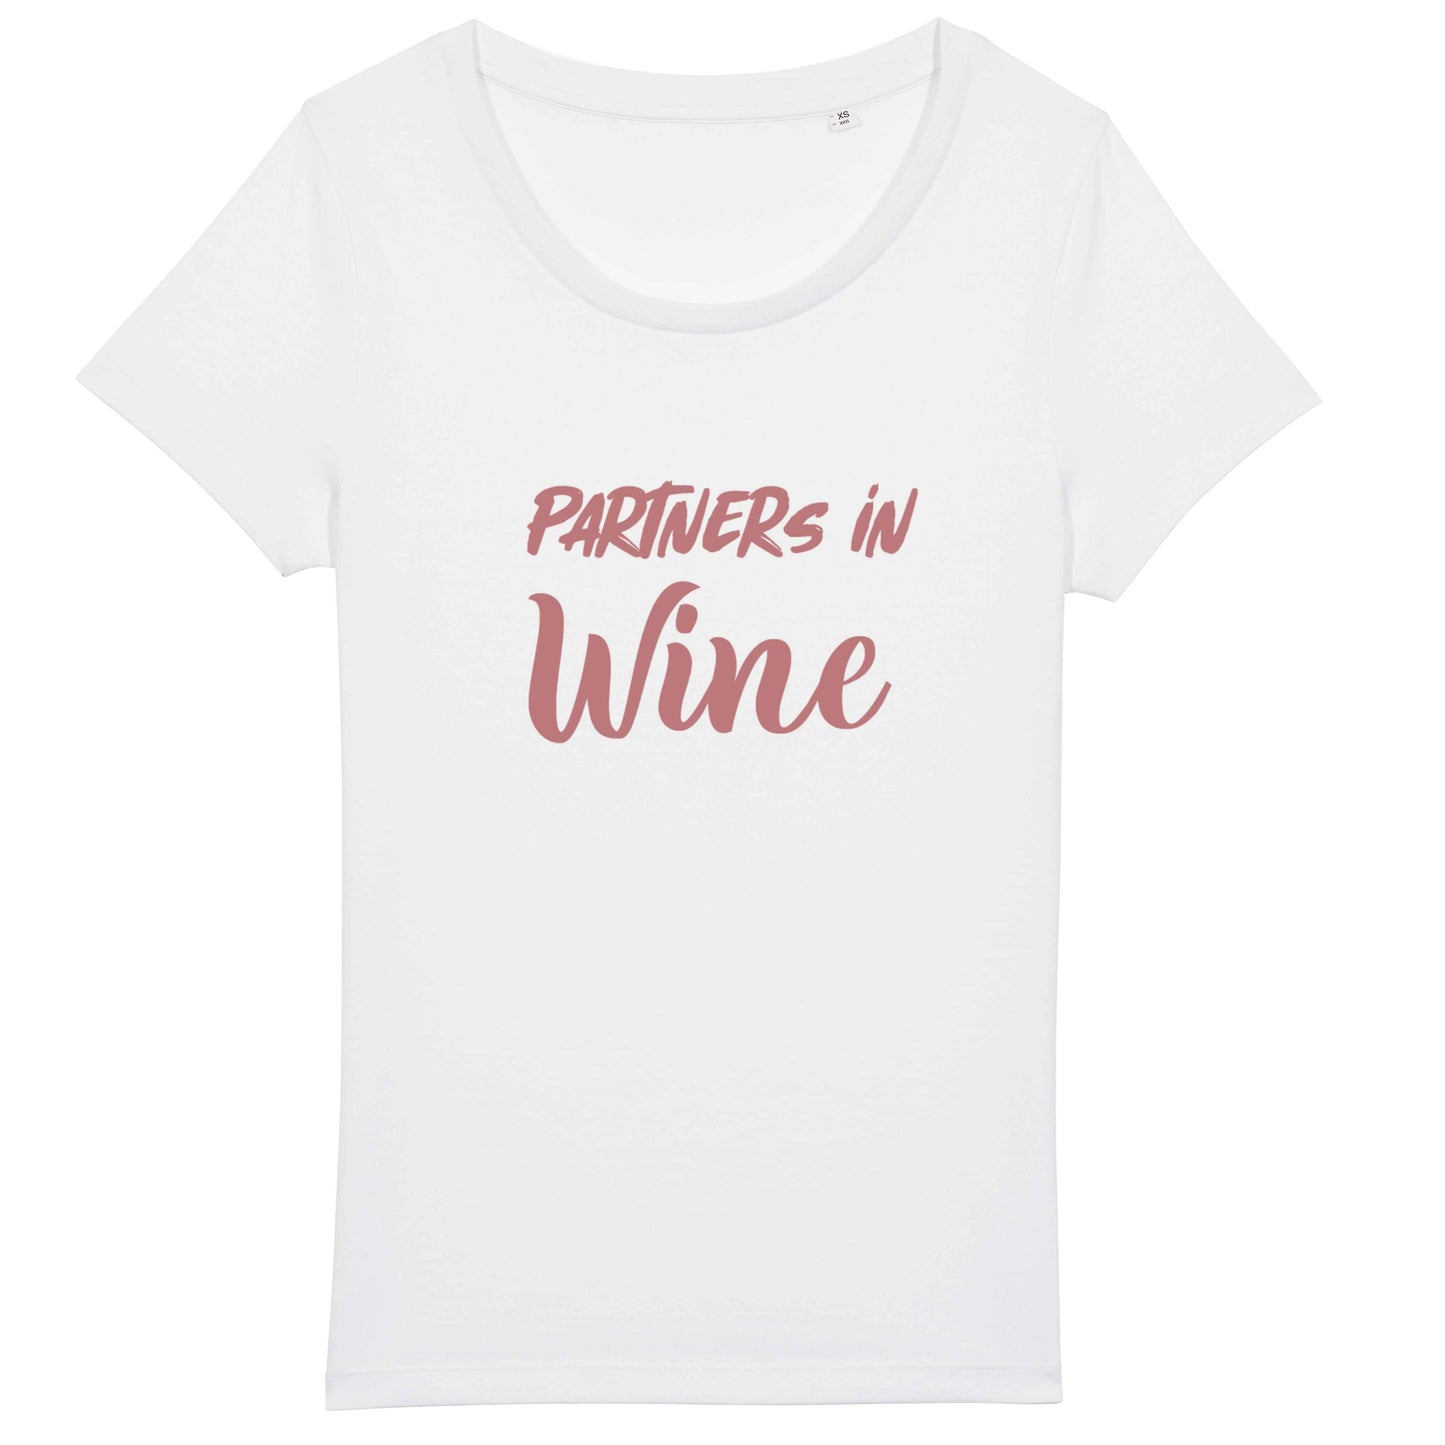 Partners in wine  - Damen Organic Shirt